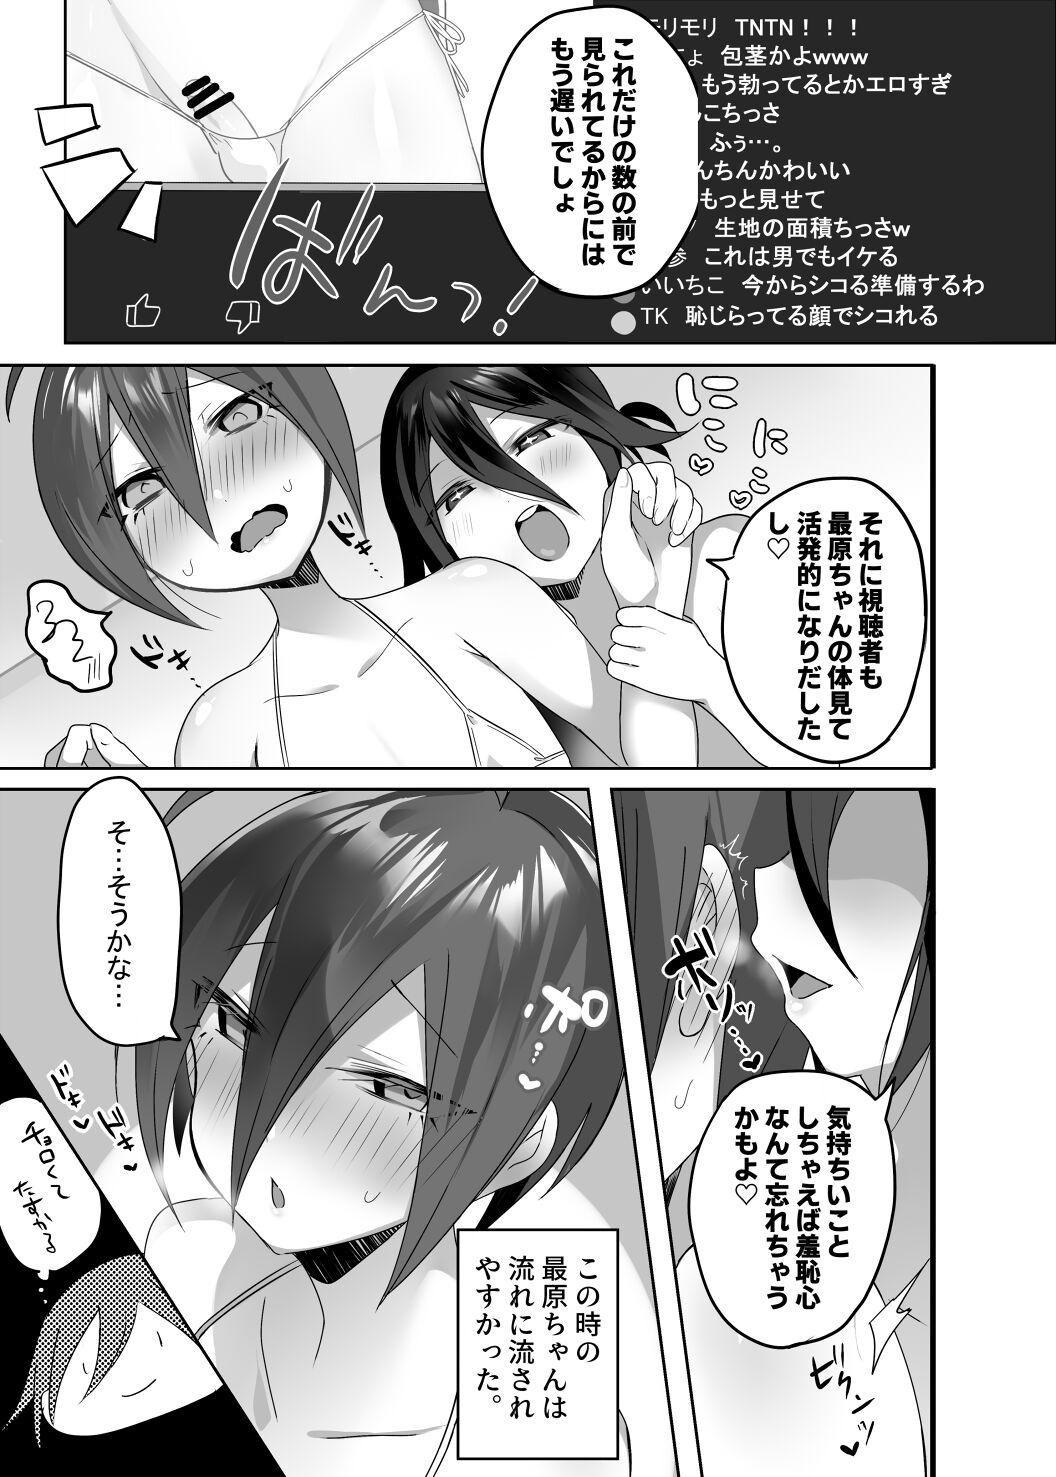 Teenager Tanpen Ero Manga - Danganronpa Homo - Page 5